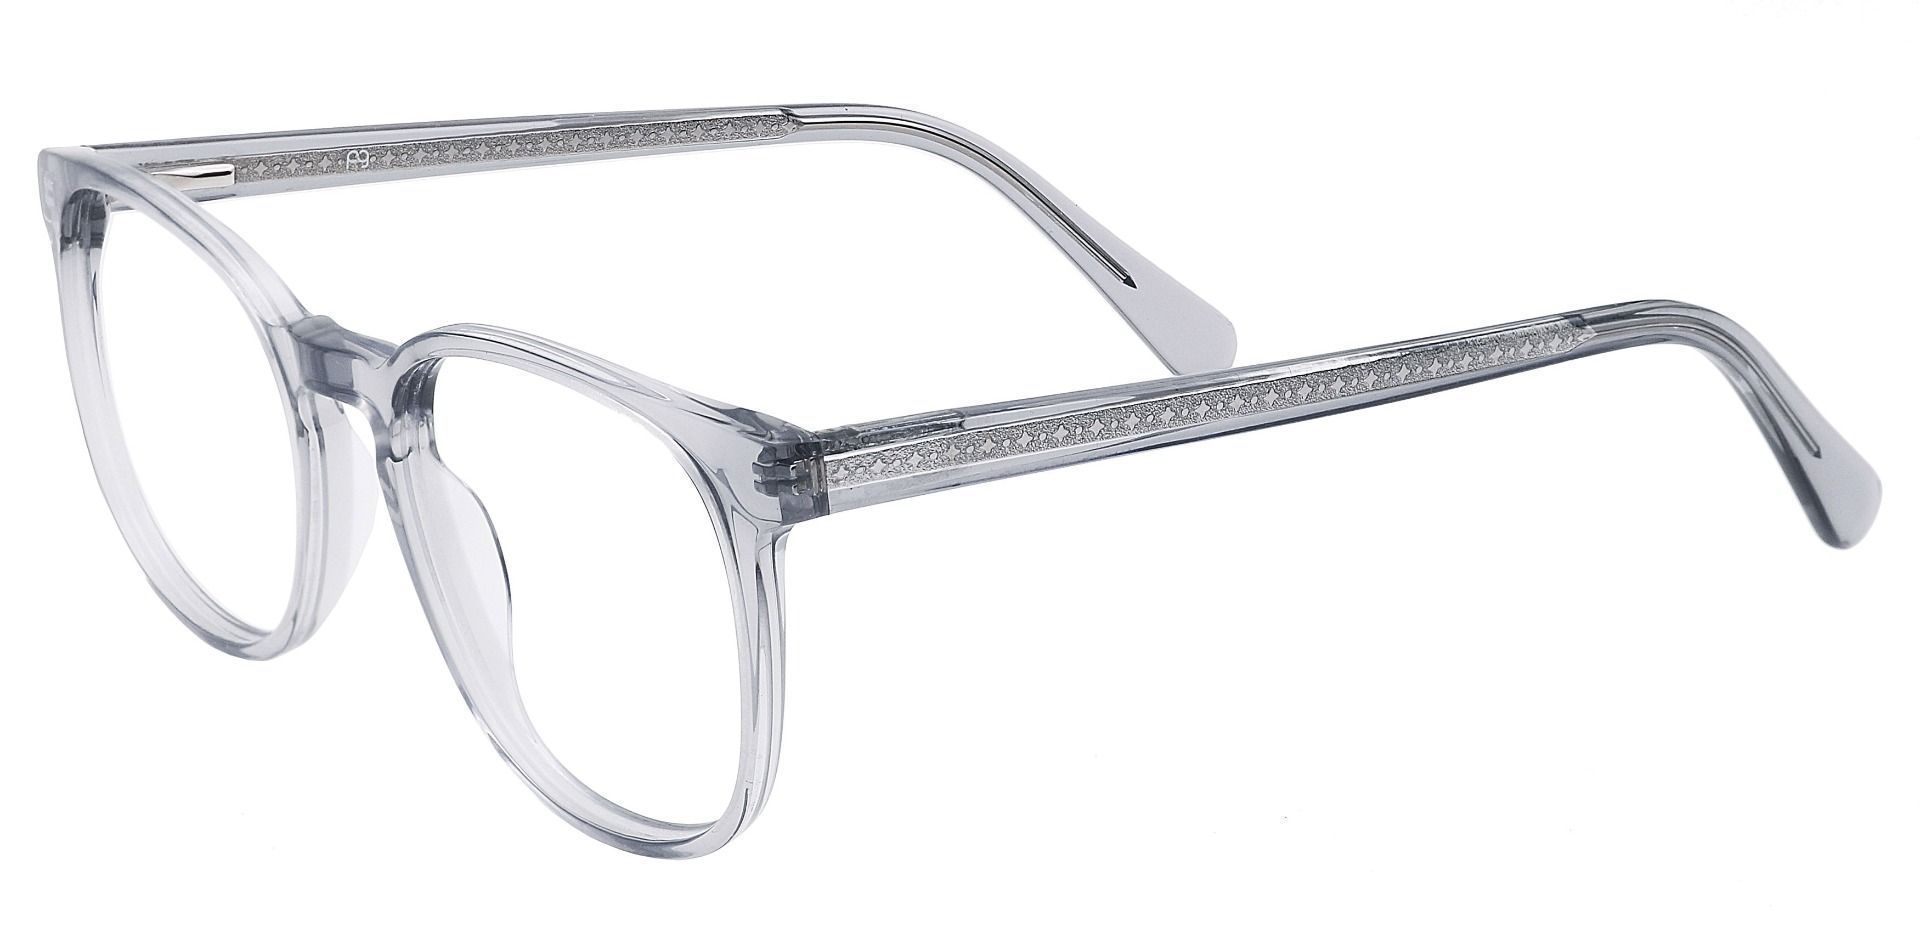 Nebula Round Progressive Glasses - Gray